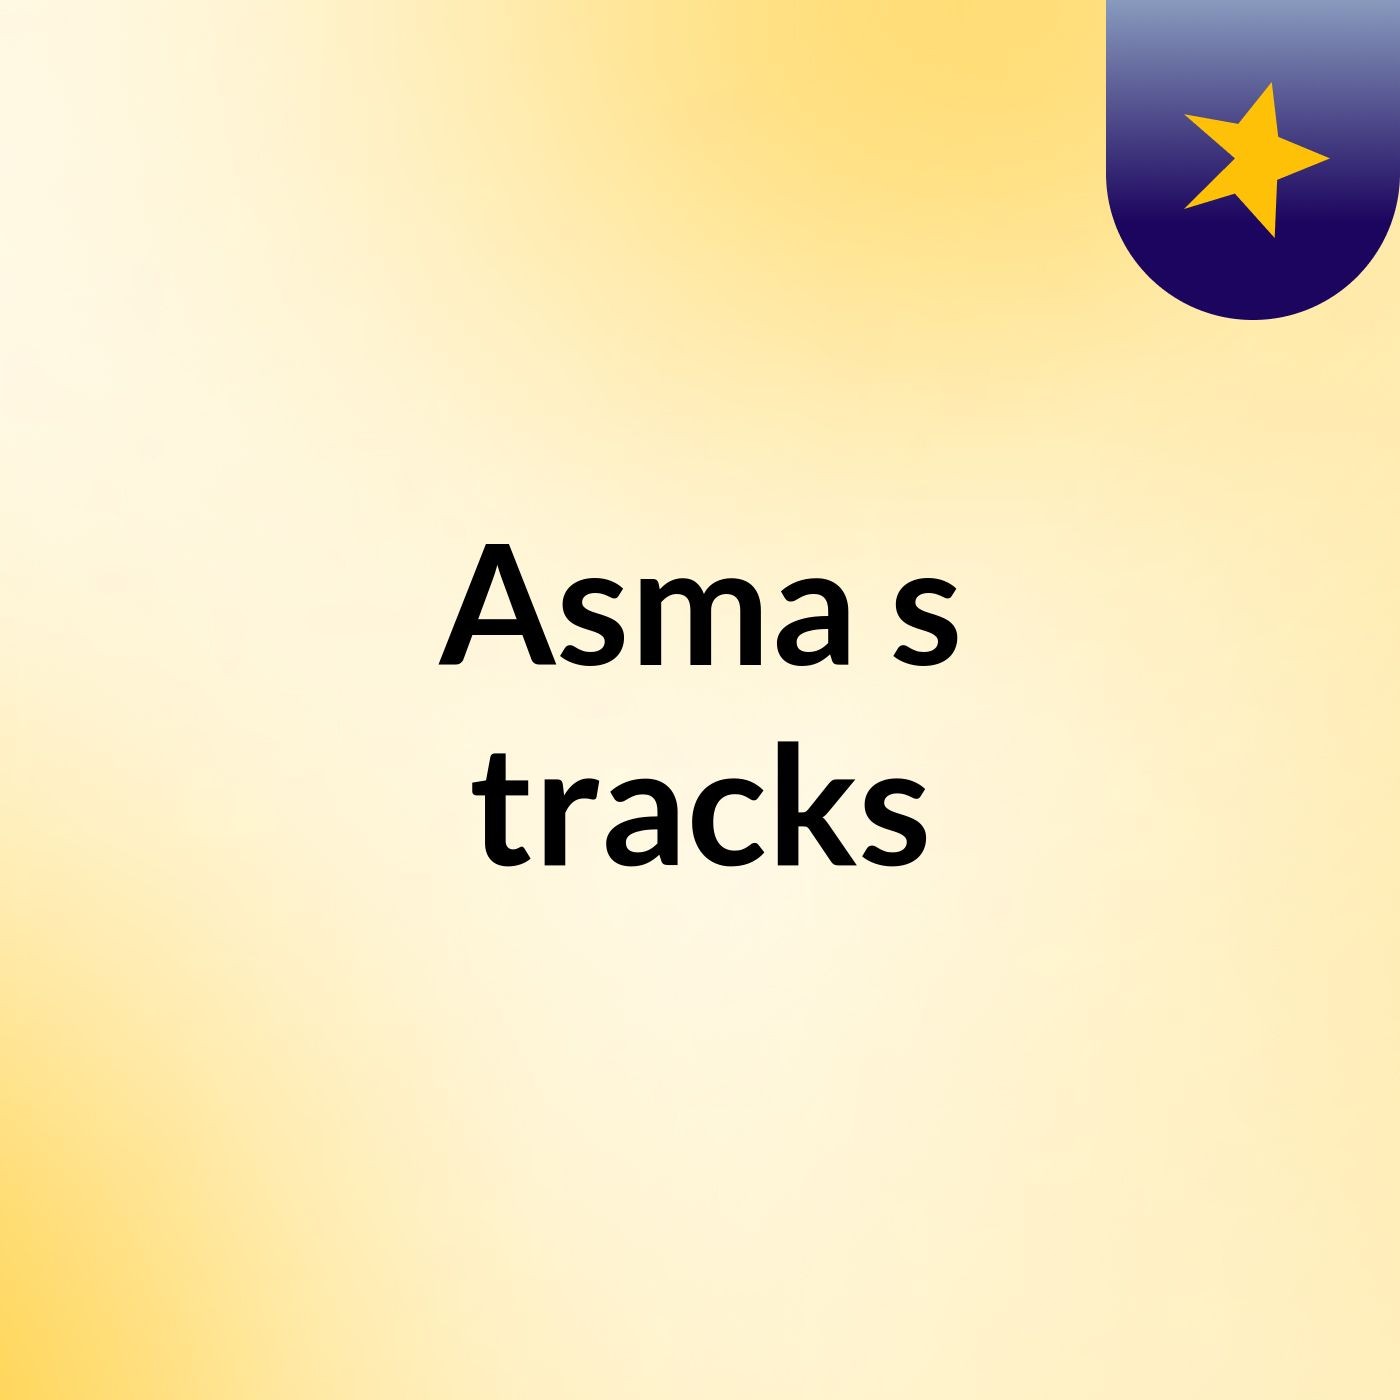 Asma's tracks